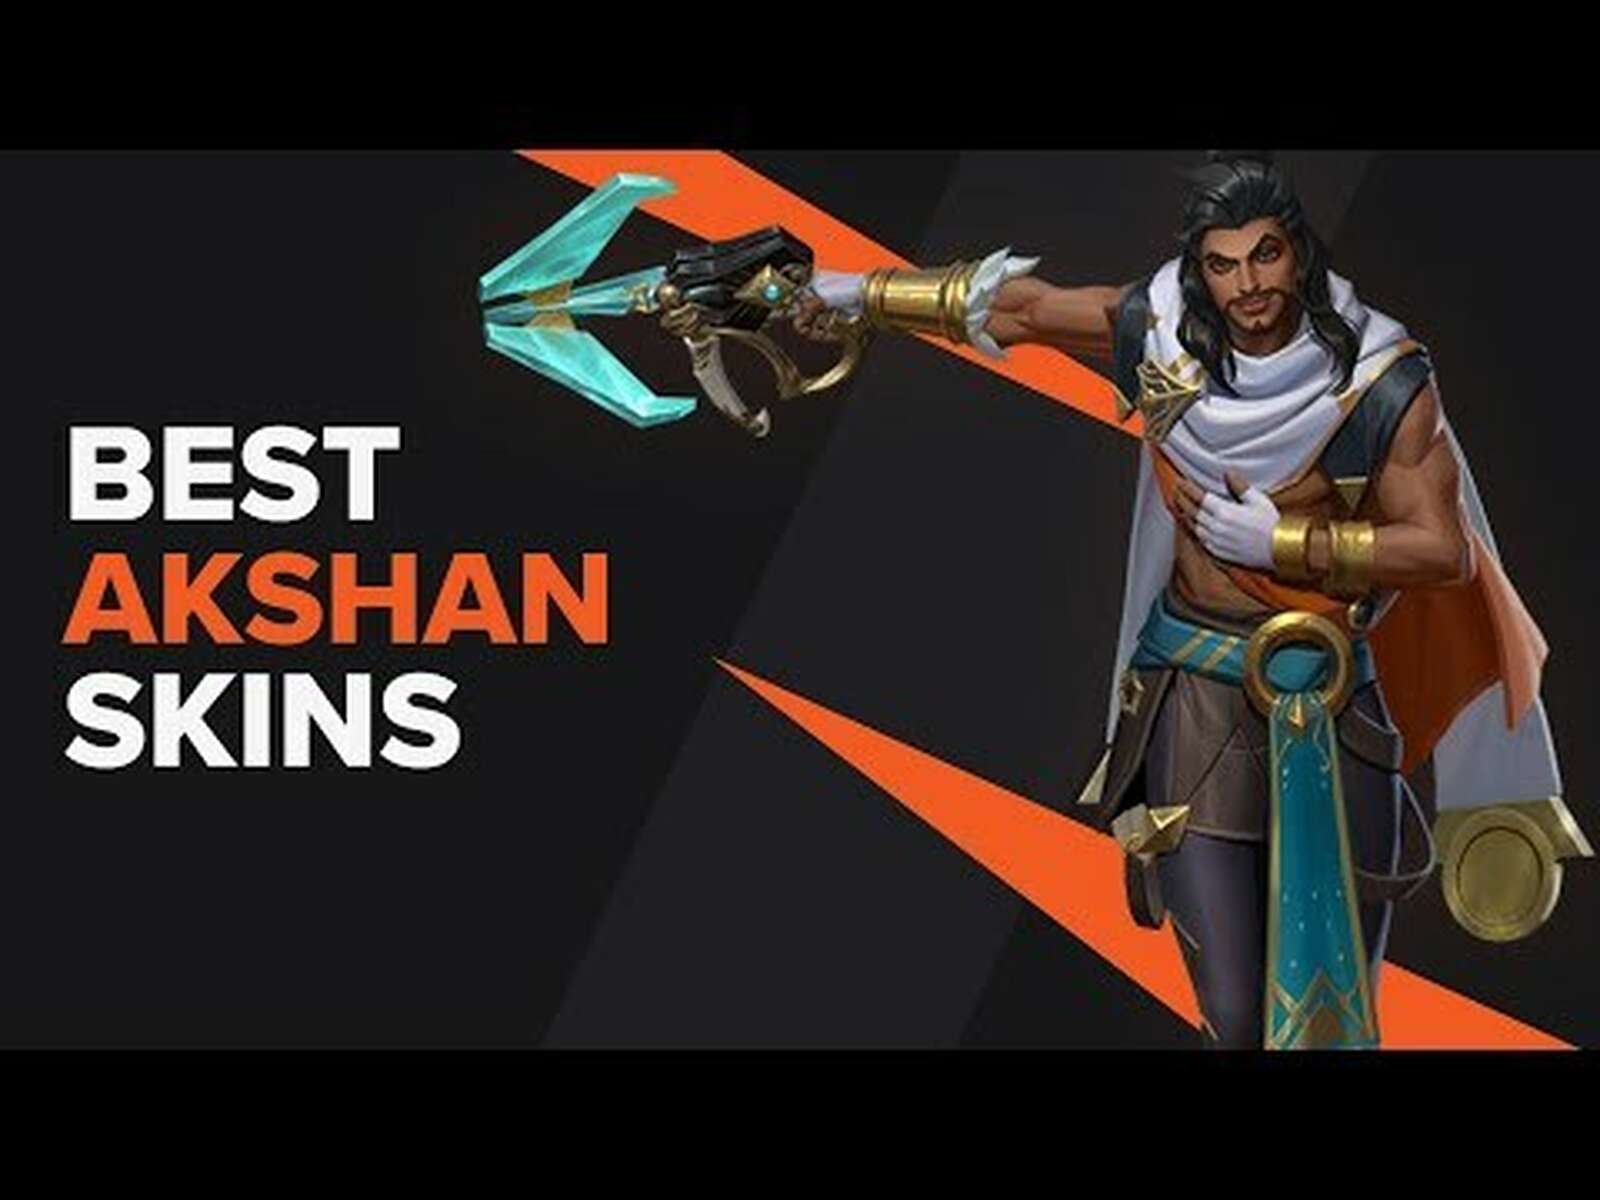 The Best Akshan Skins in League of Legends